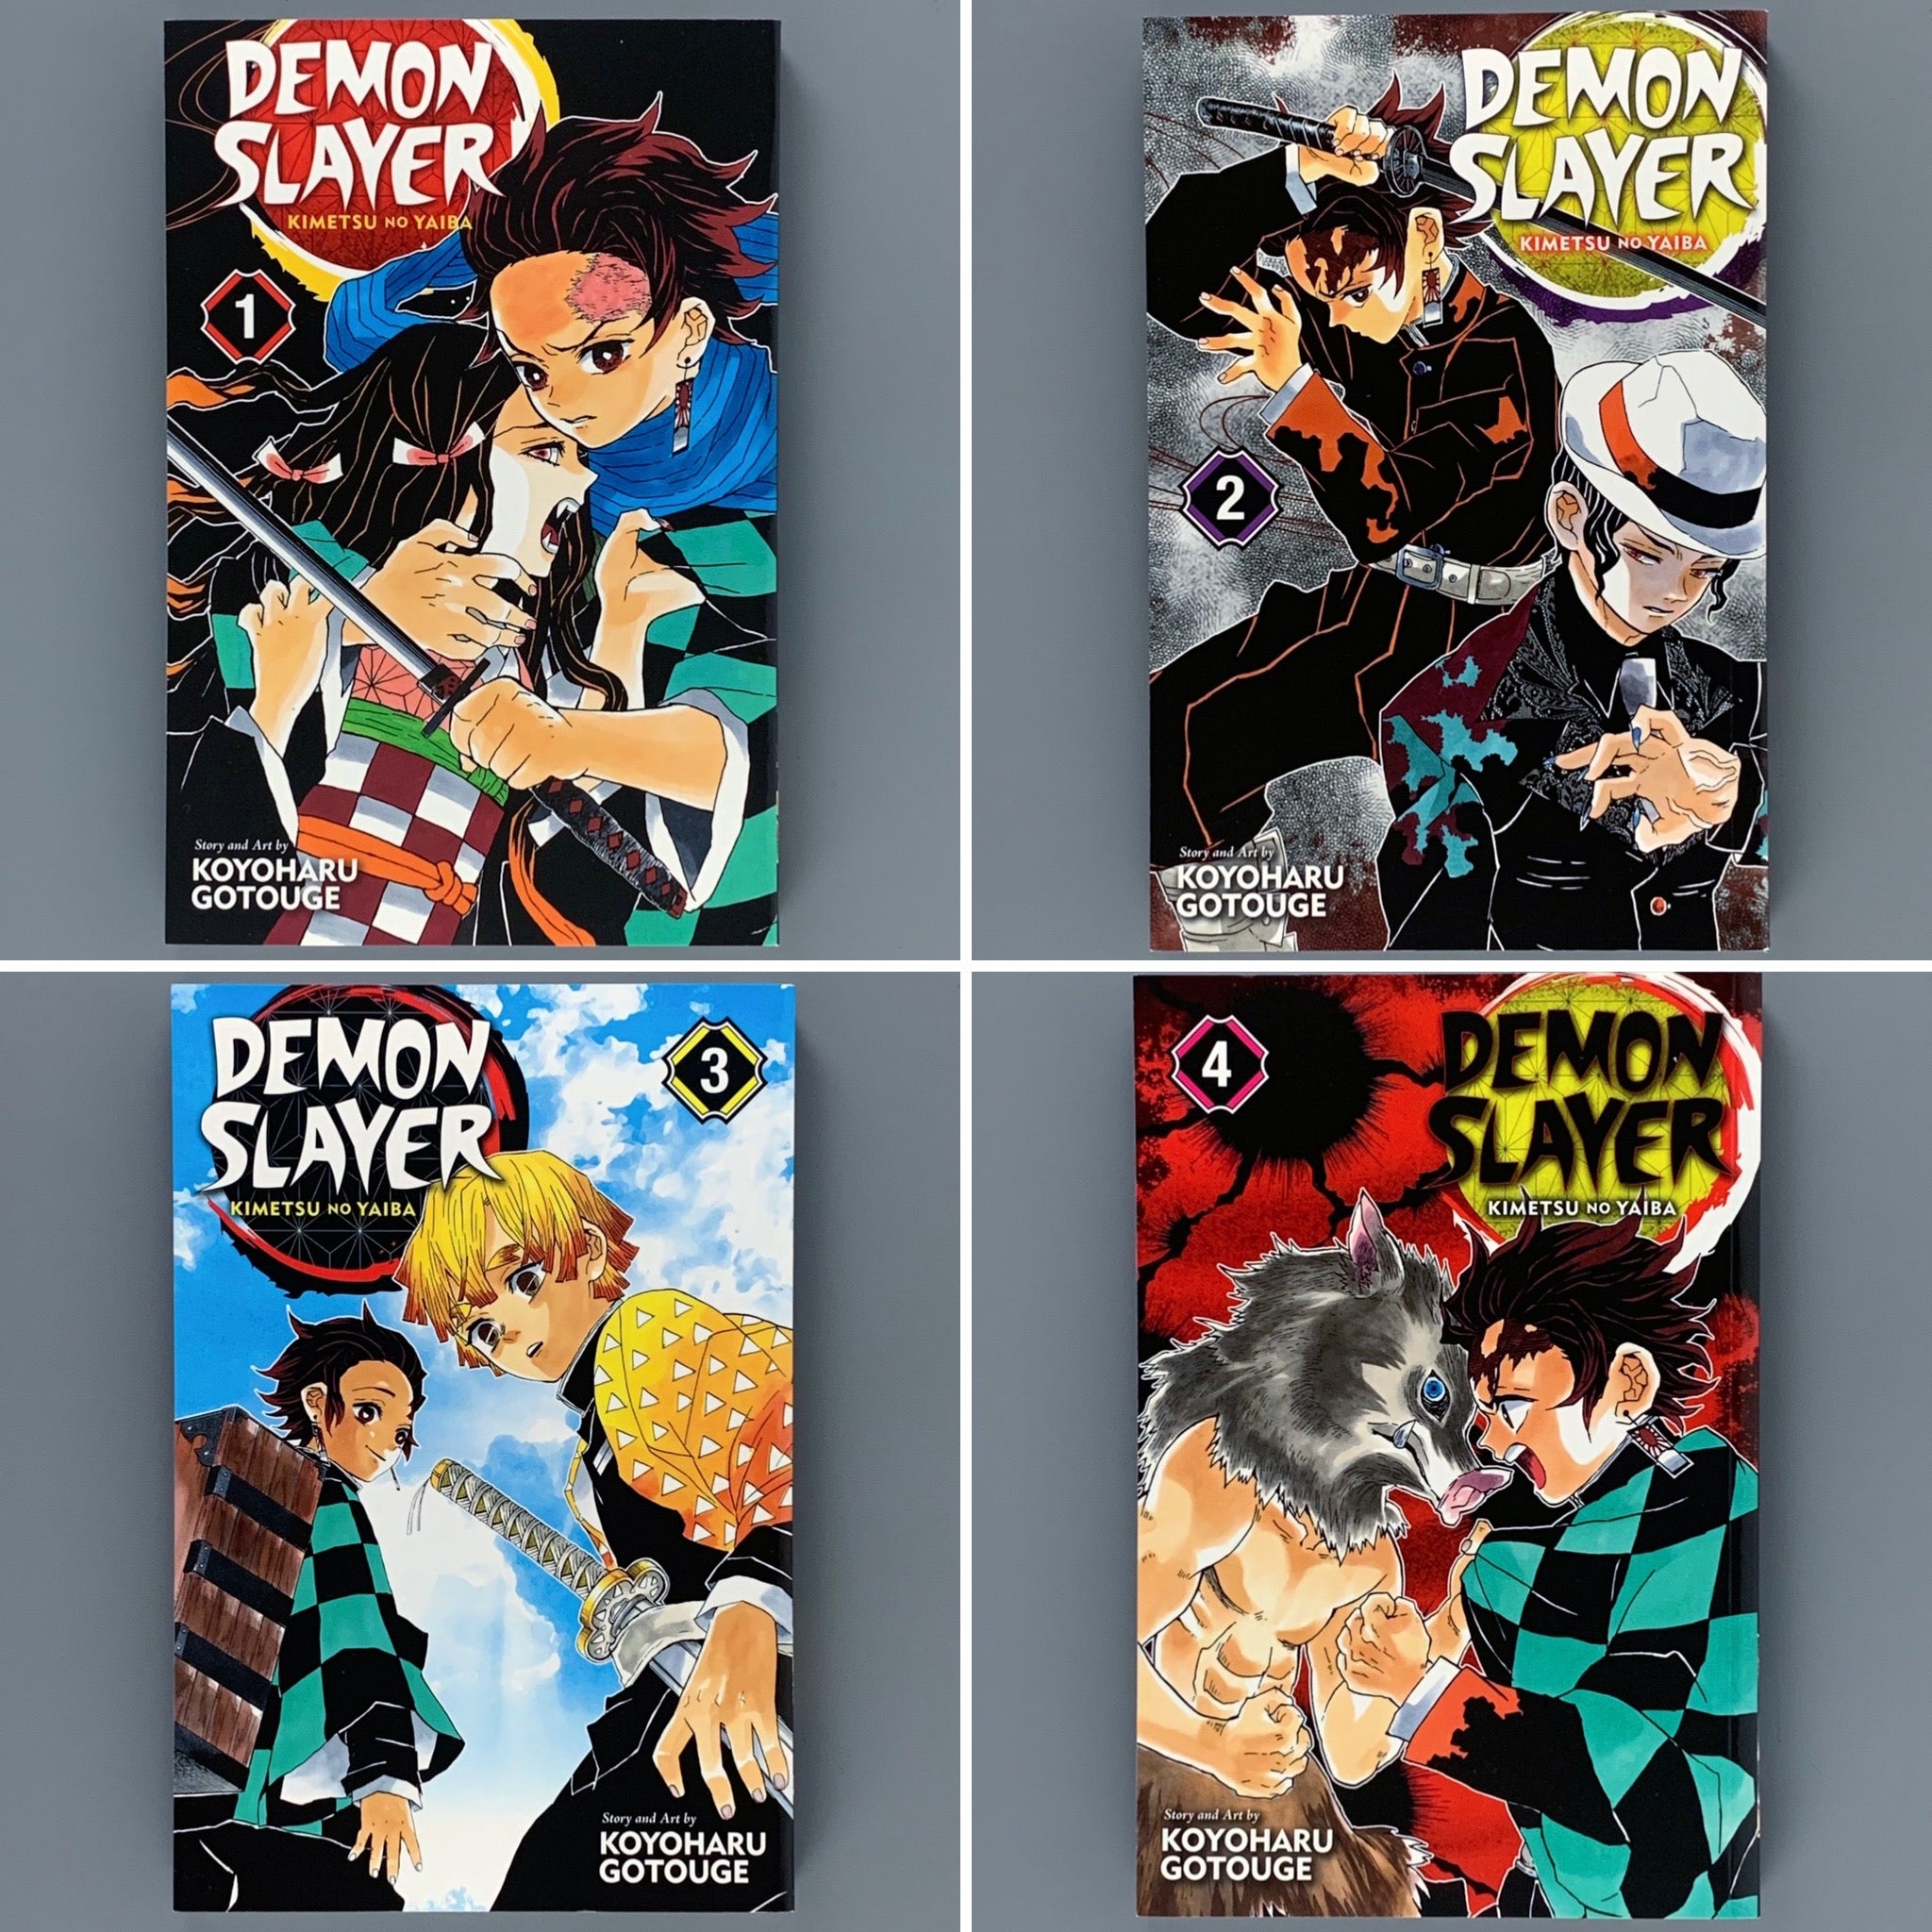 Demon Slayer: Kimetsu no Yaiba Volumes 3 and 4 Manga Review - TheOASG